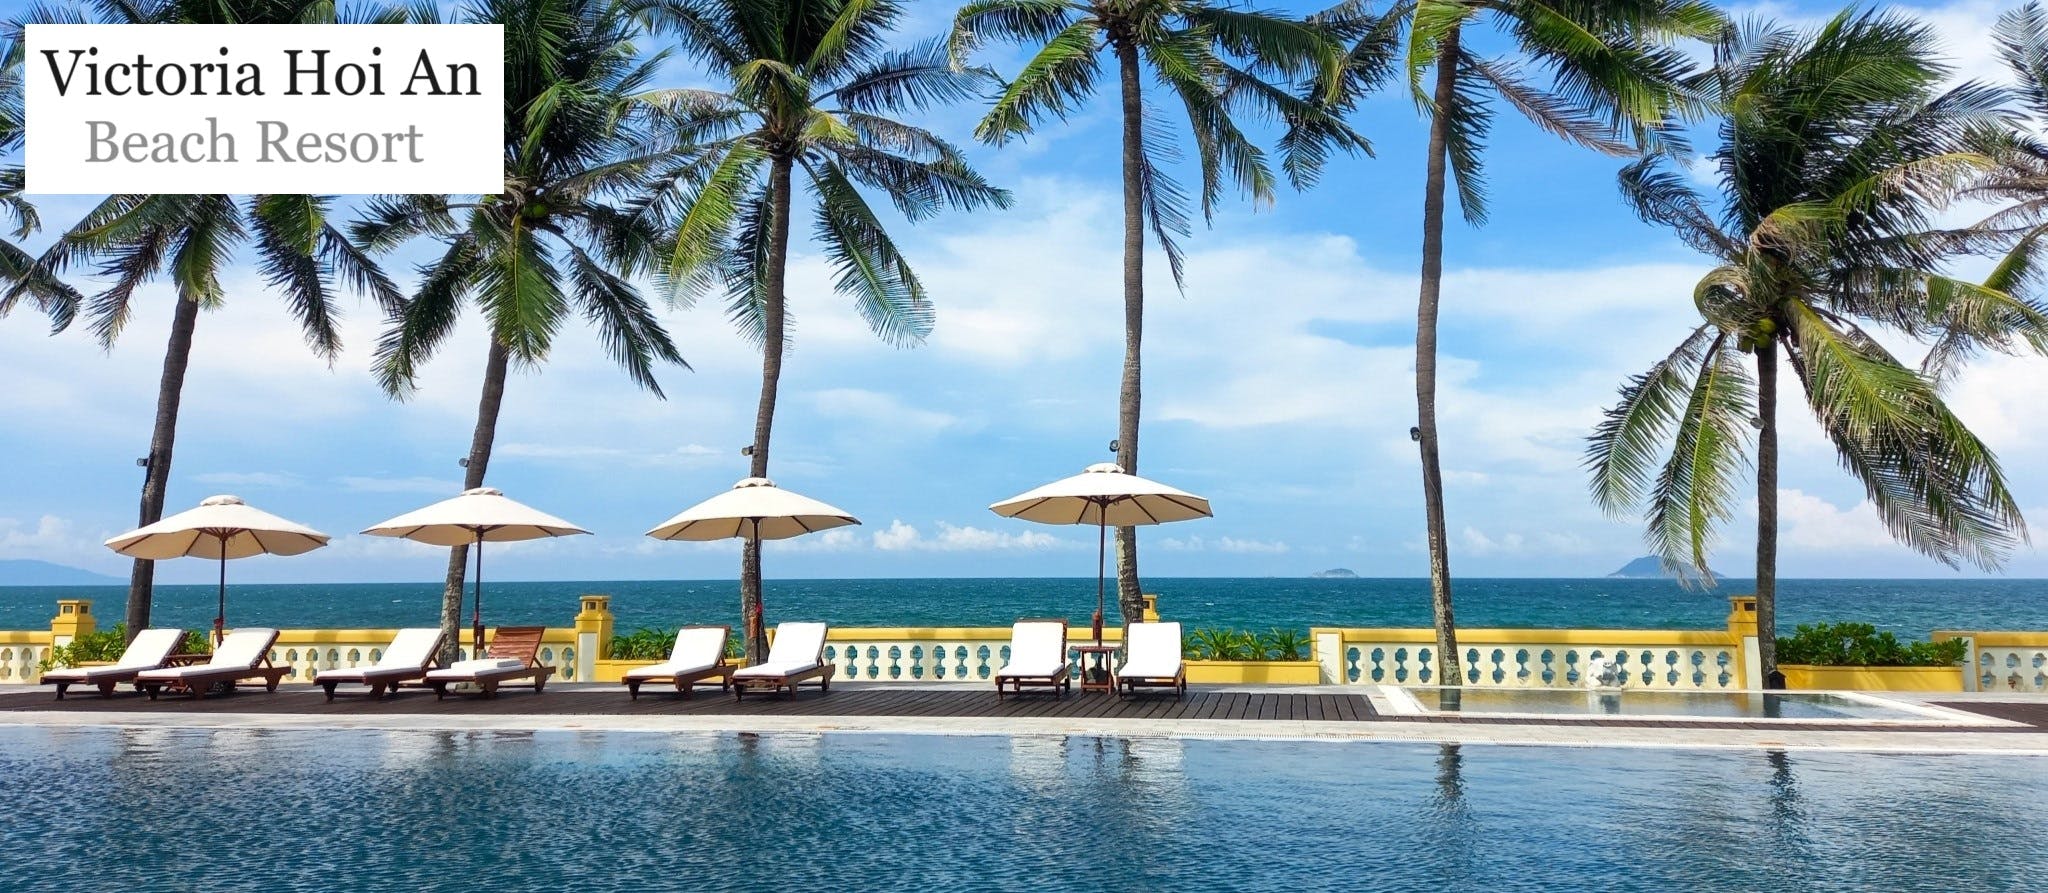 Victoria Hoi An Beach Resort & Spa, Vietnam, Independent Review